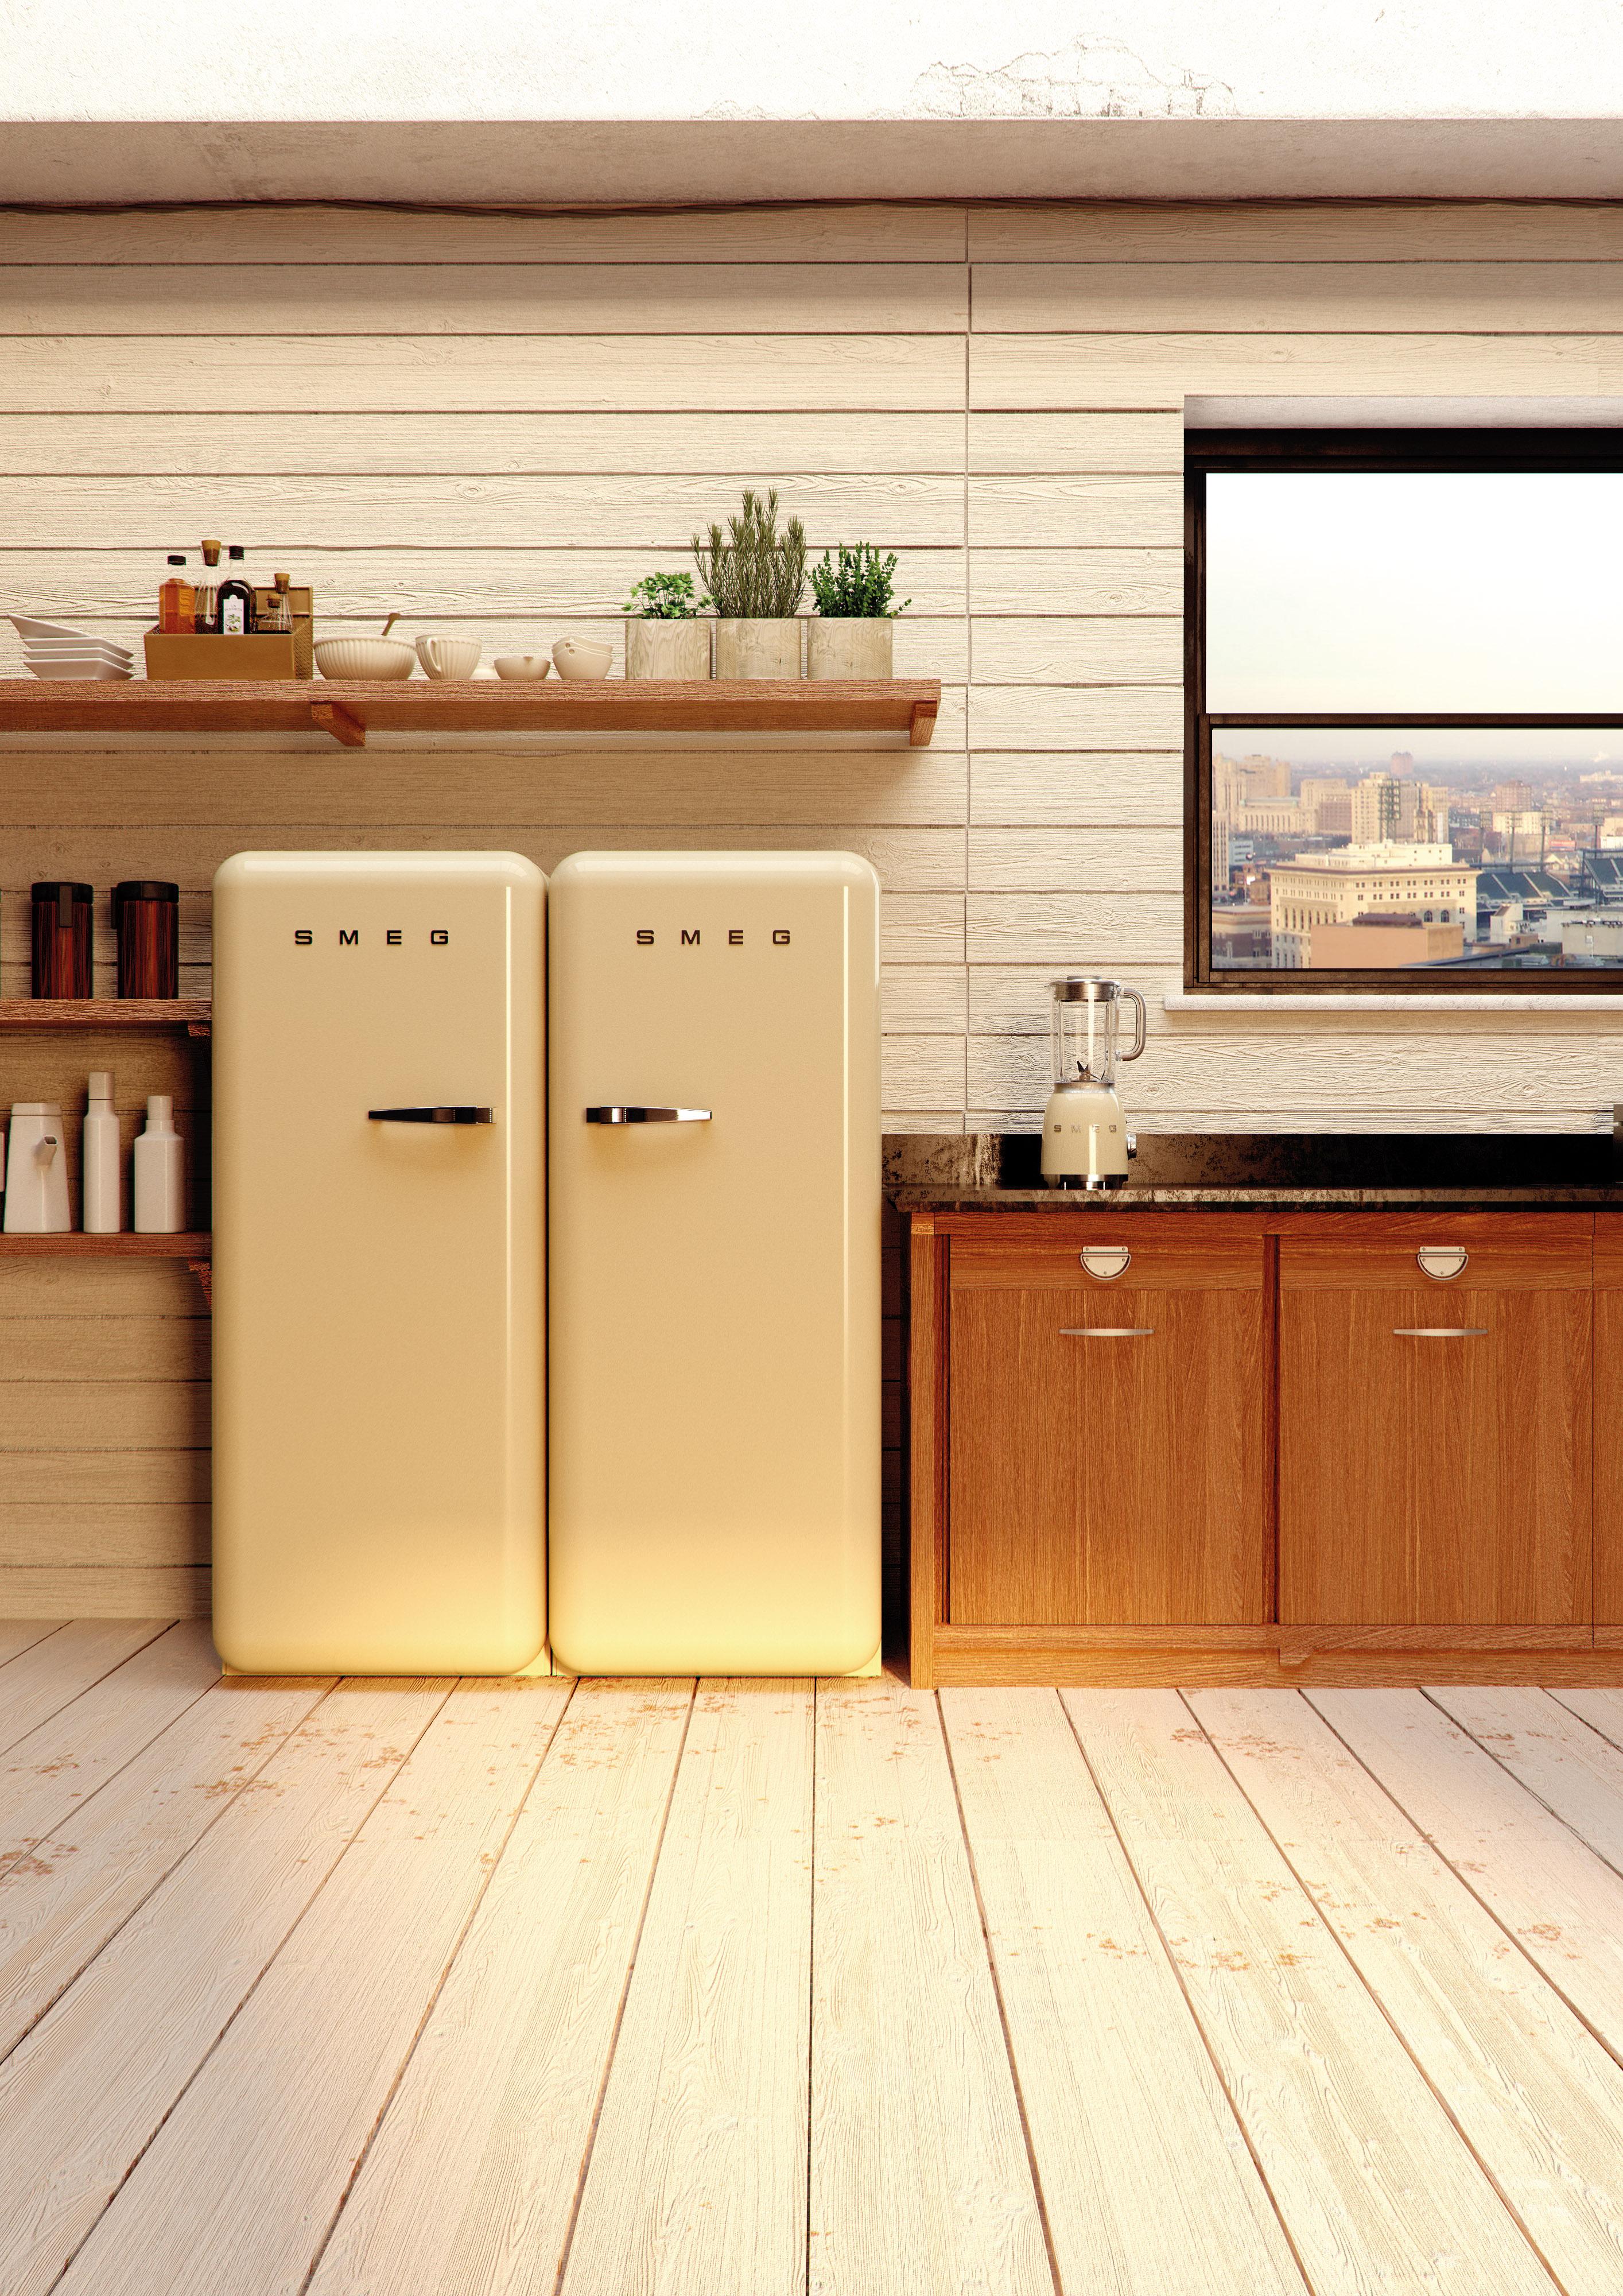 Retro-Kühlschränke in heller Küche #retro #kühlschrank #retrokühlschrank ©Smeg